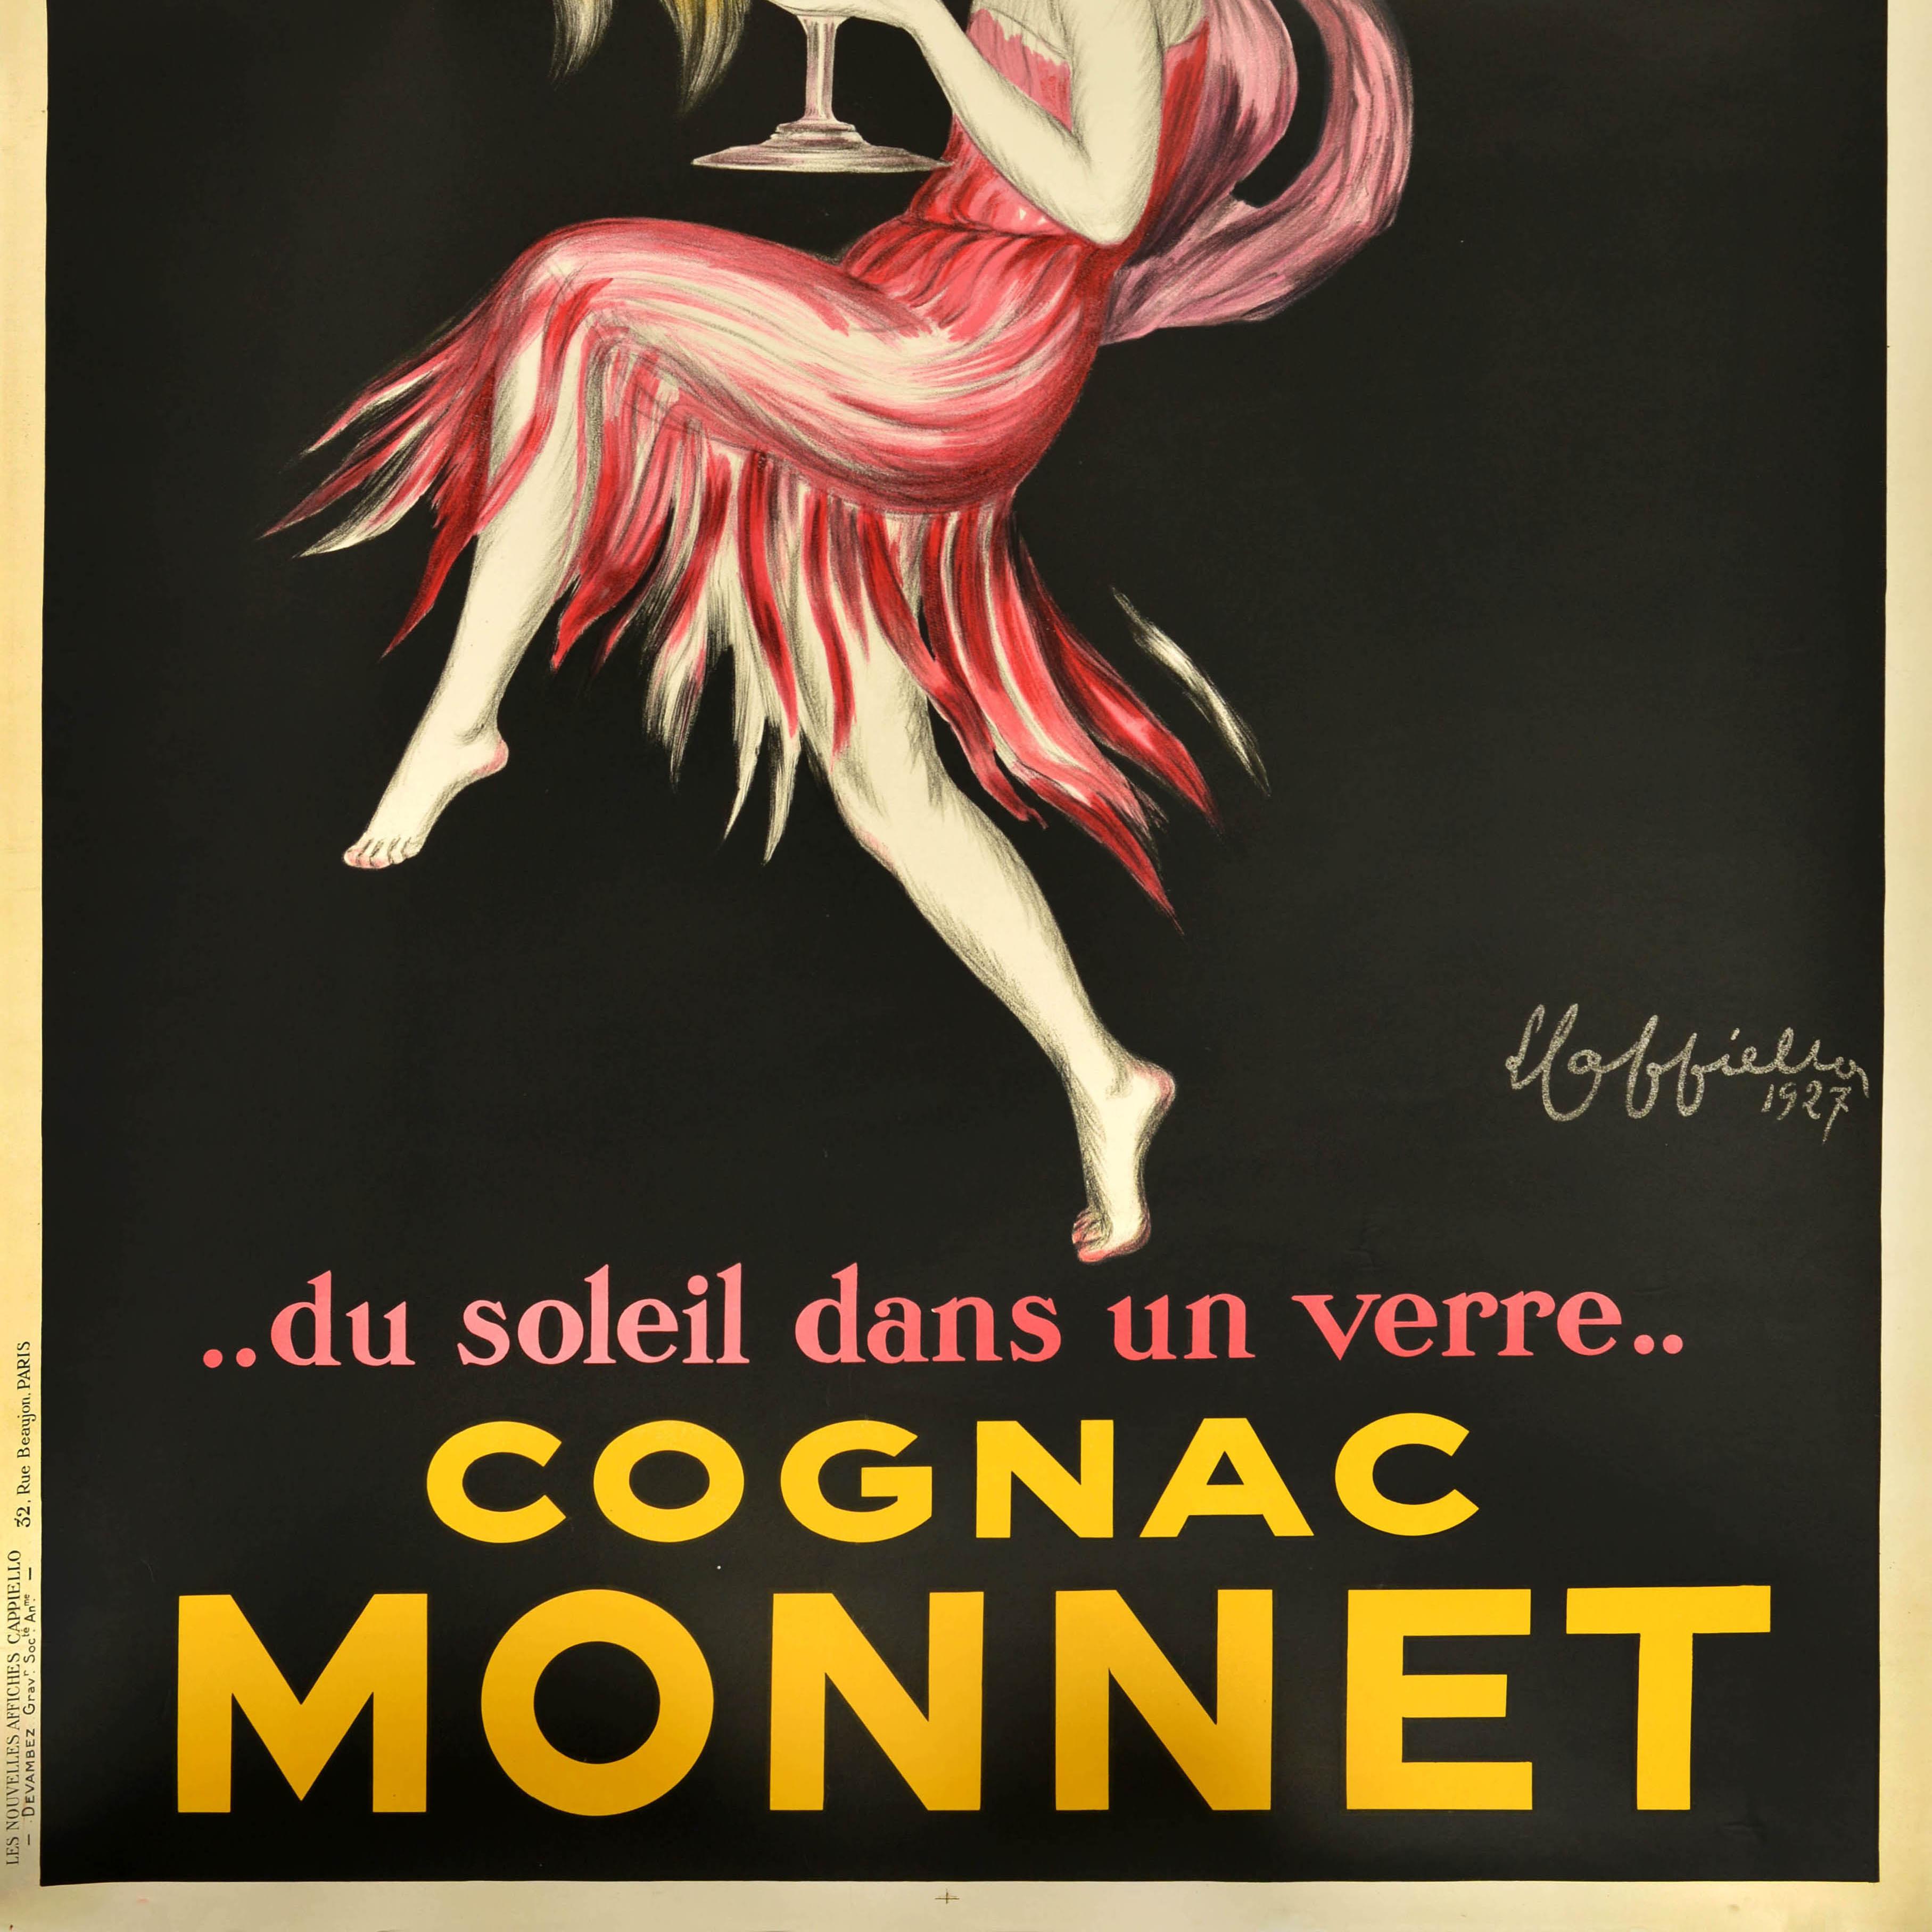 Original Vintage Drink Advertising Poster Cognac Monnet Leonetto Cappiello For Sale 3